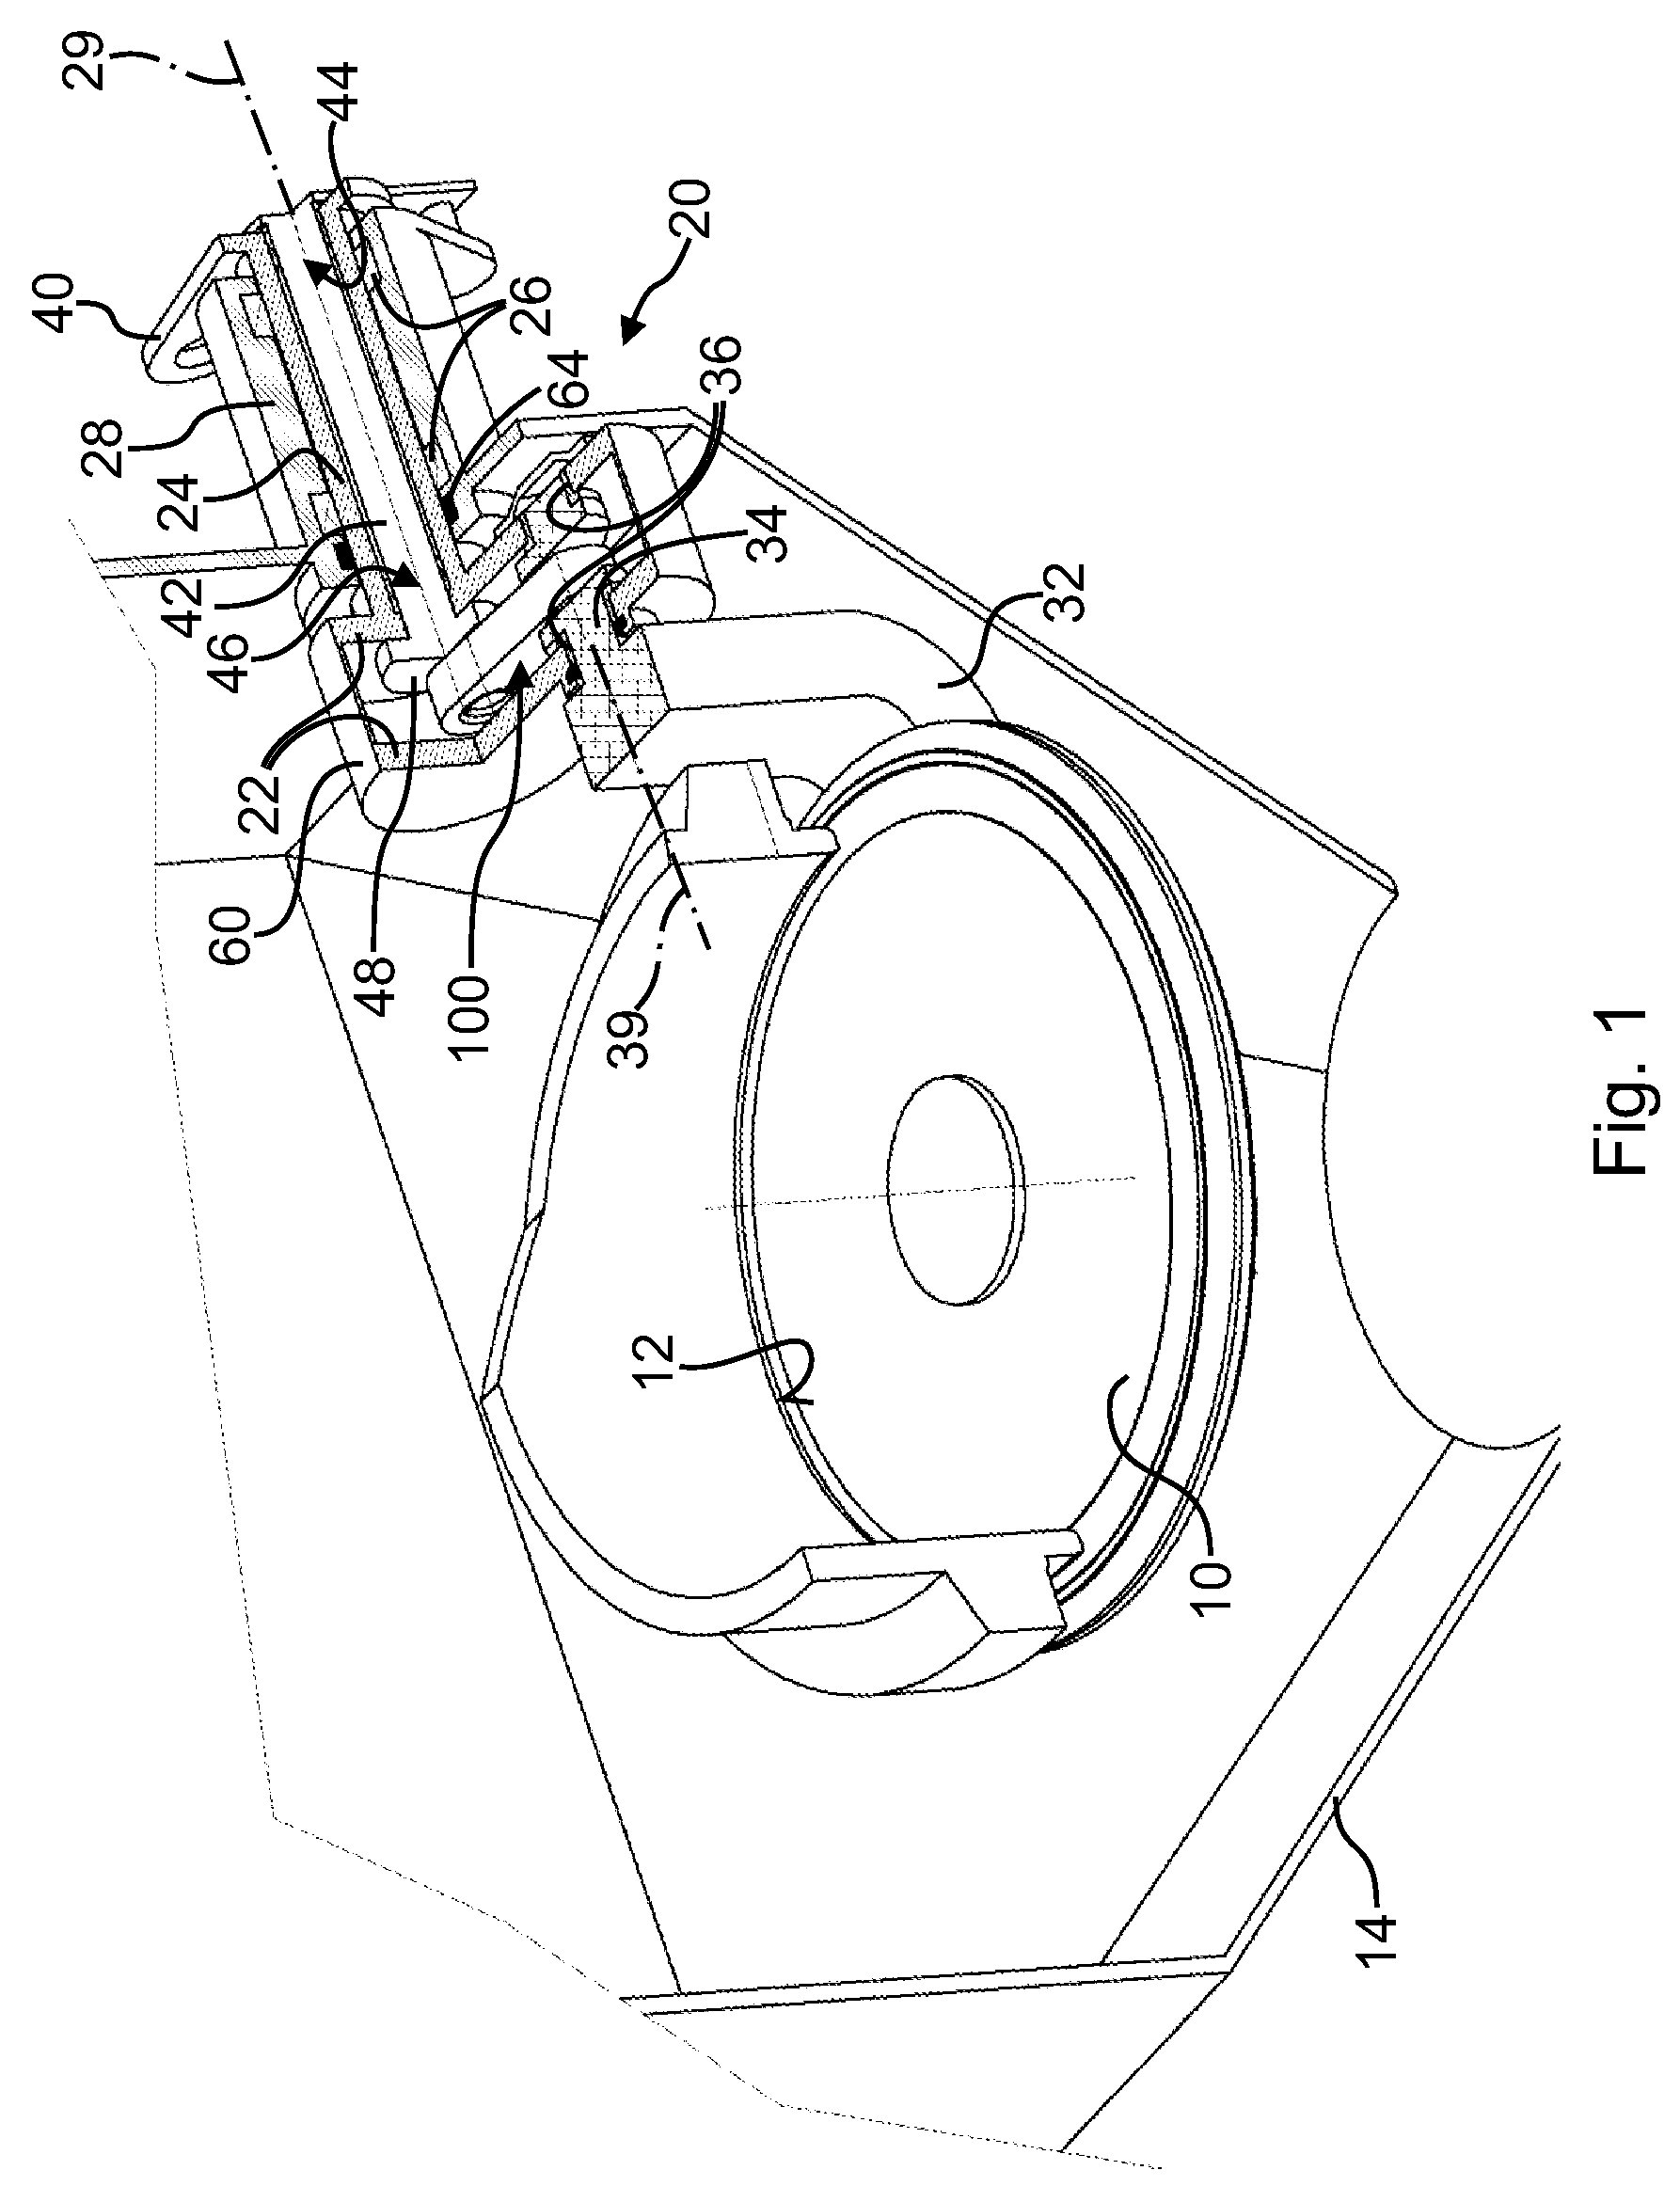 Sealing valve arrangement for a shaft furnace charging installation